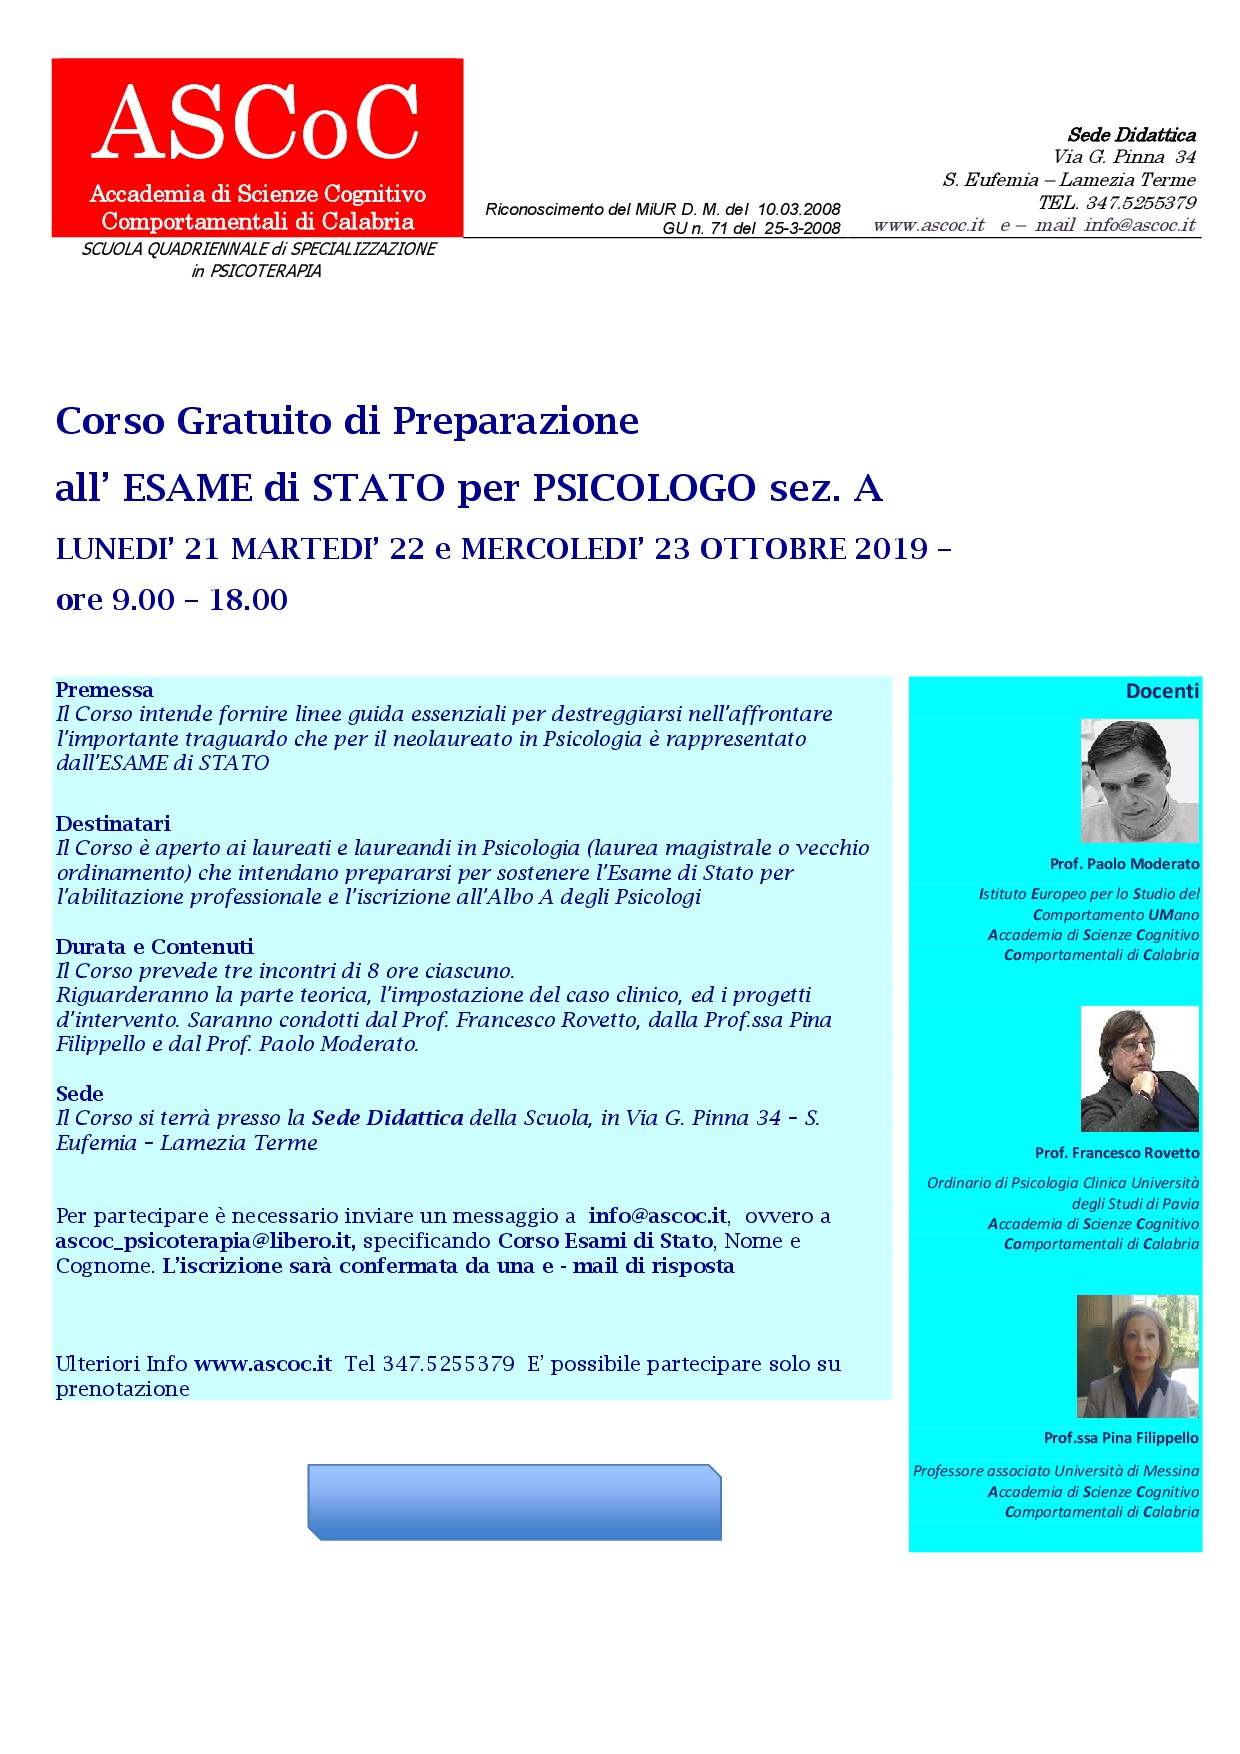 LOCANDINA-ESAMI-DI-STATO-ASCOC-2019-1.jpg